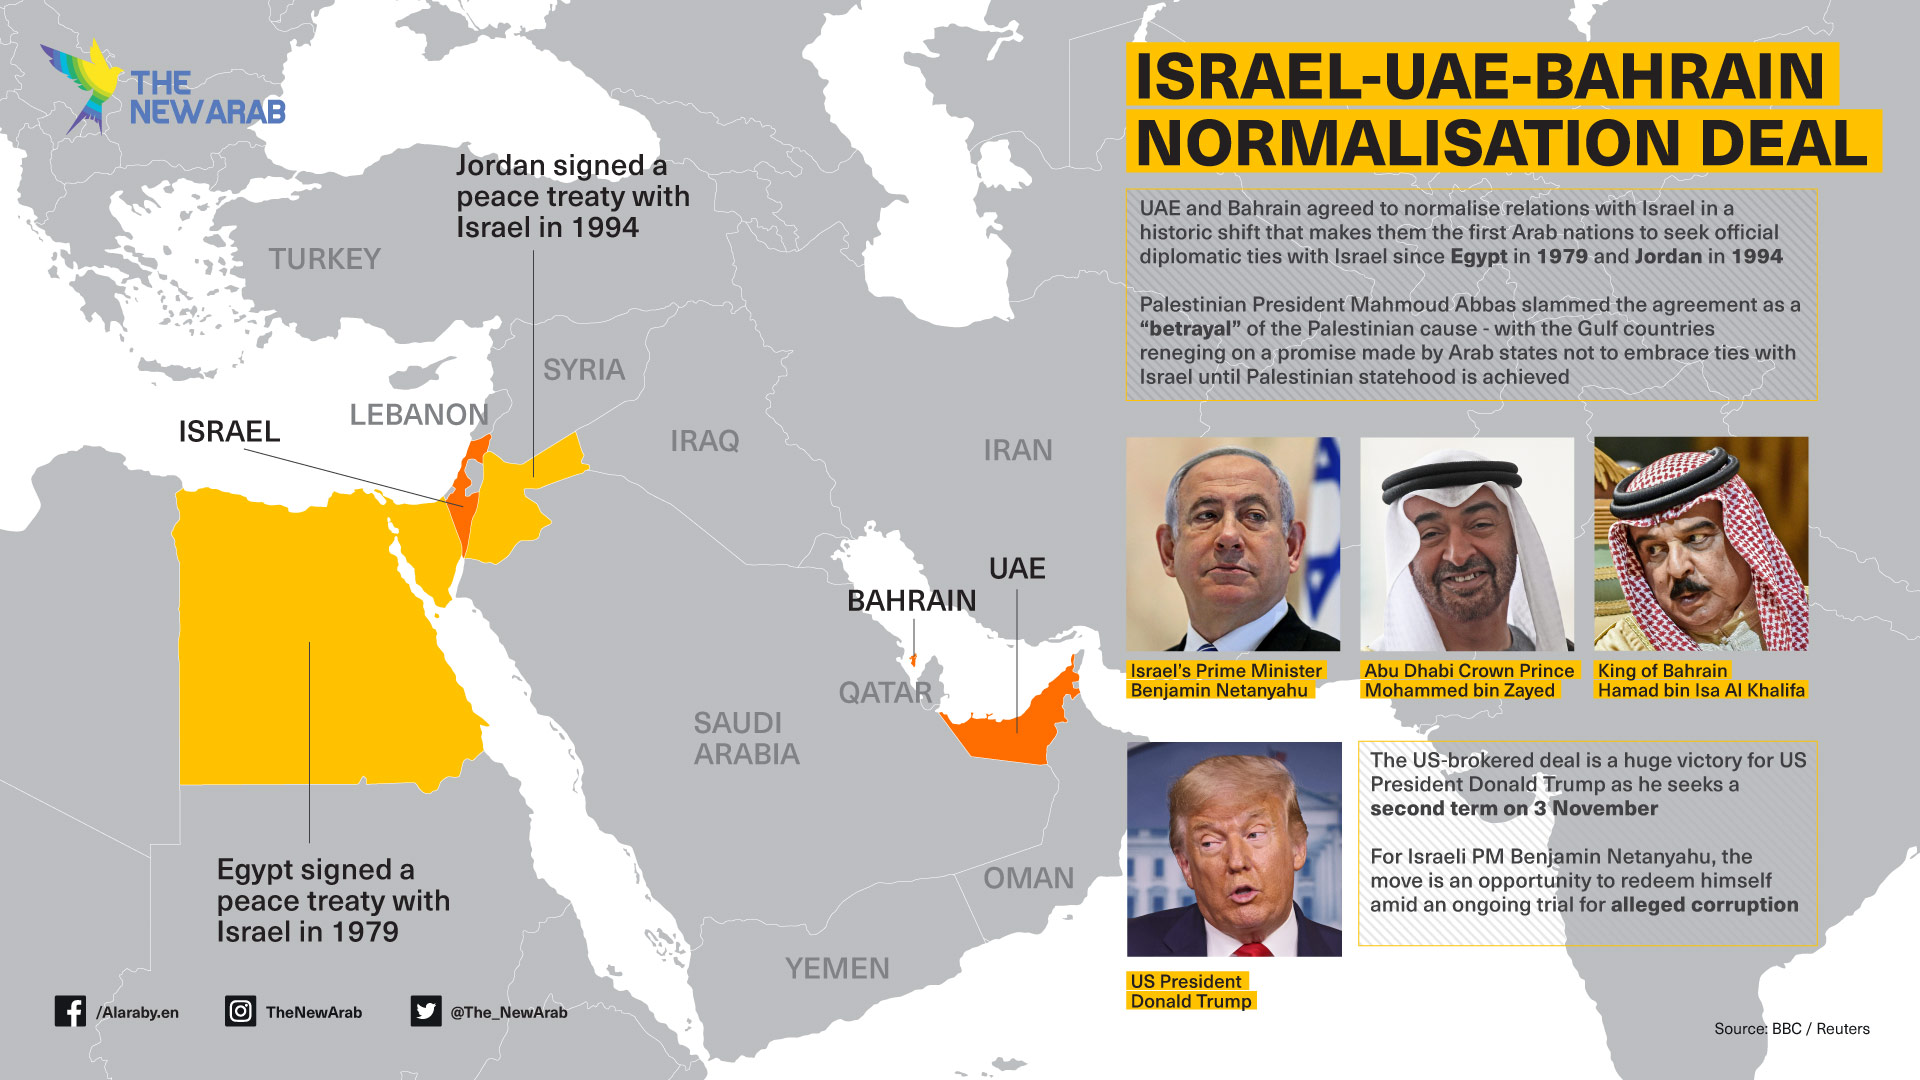 Israel-UAE-Bahrain normalisation deal